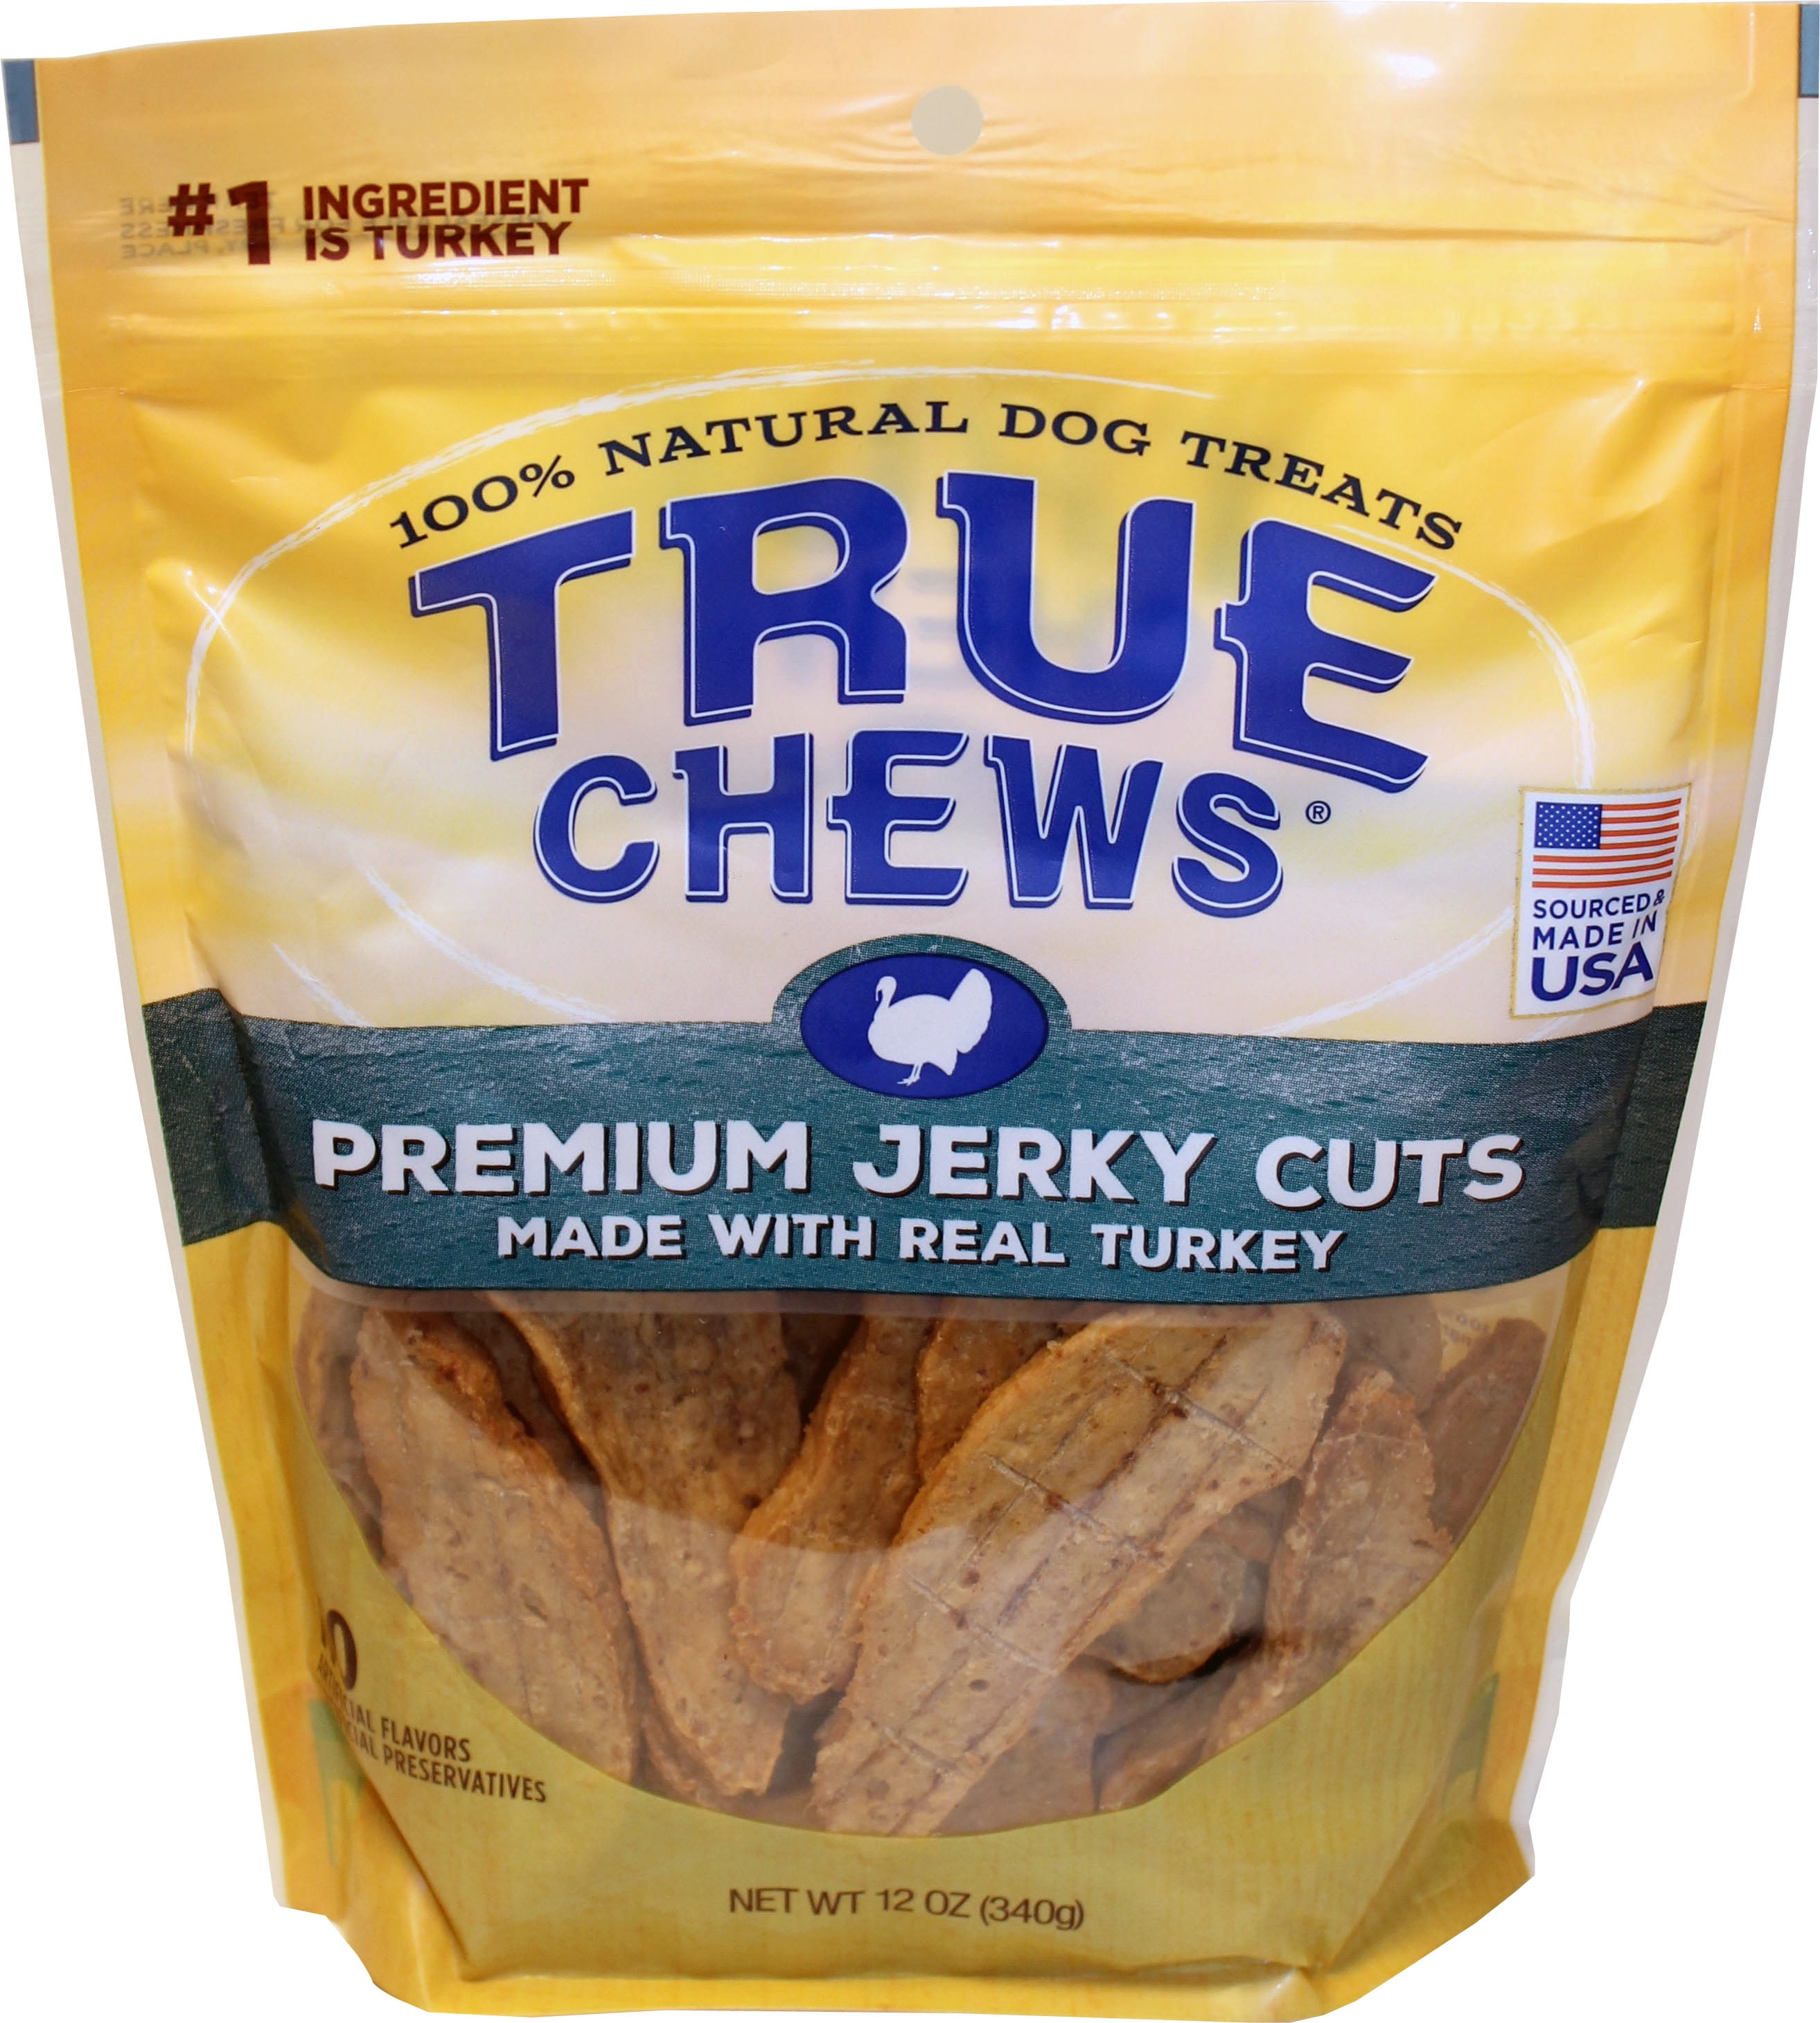 Real Dog: Premium Air-Dried Dog Treats & Chews